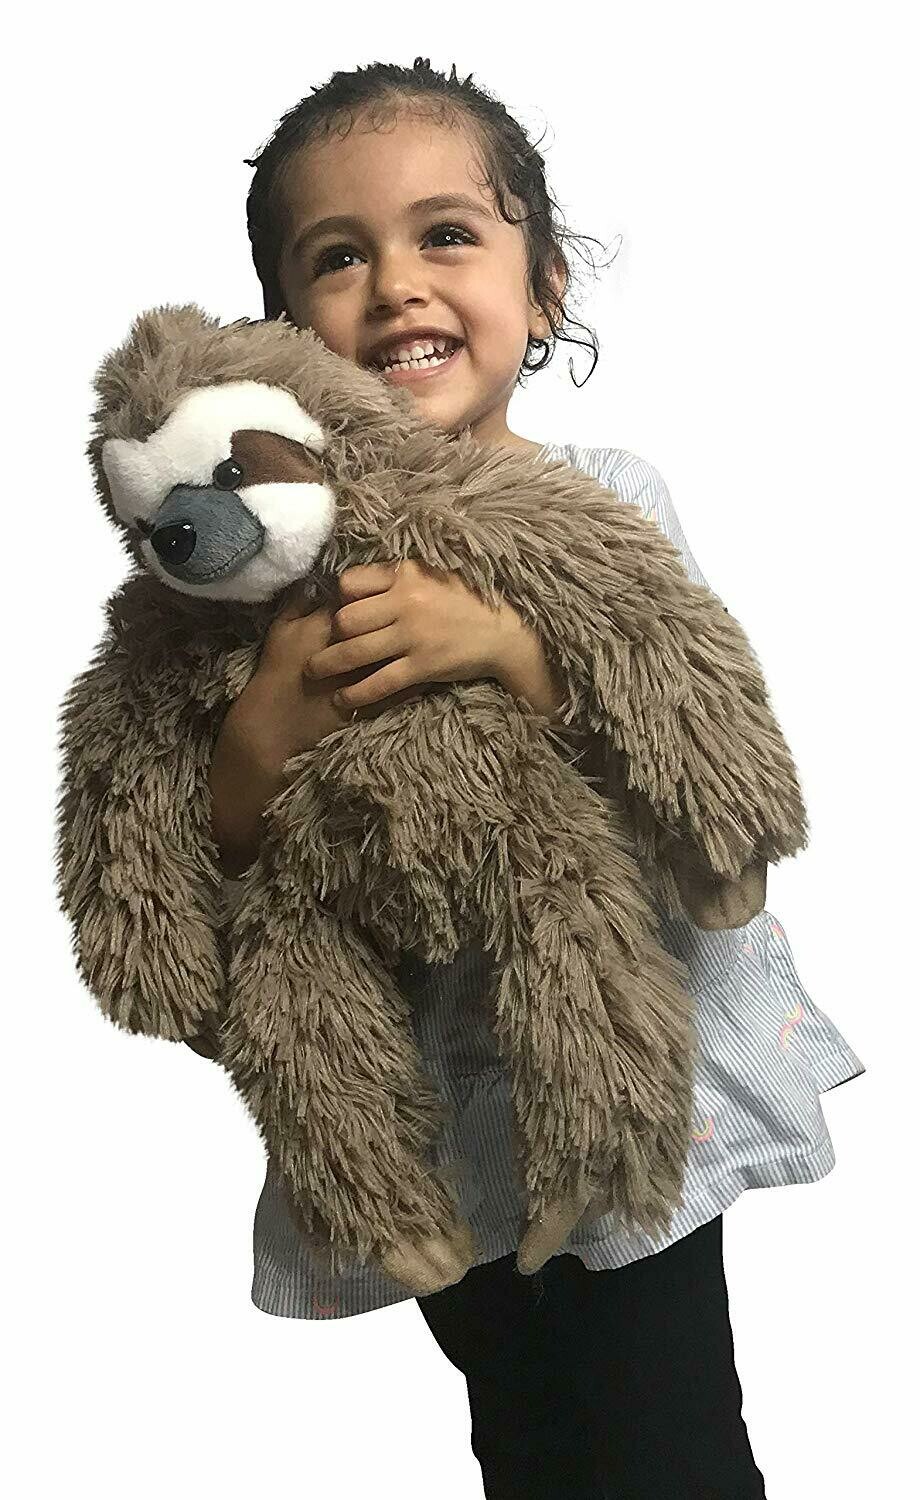 GRIFIL ZERO Three Toed Sloth Stuffed Animal Plush Toy